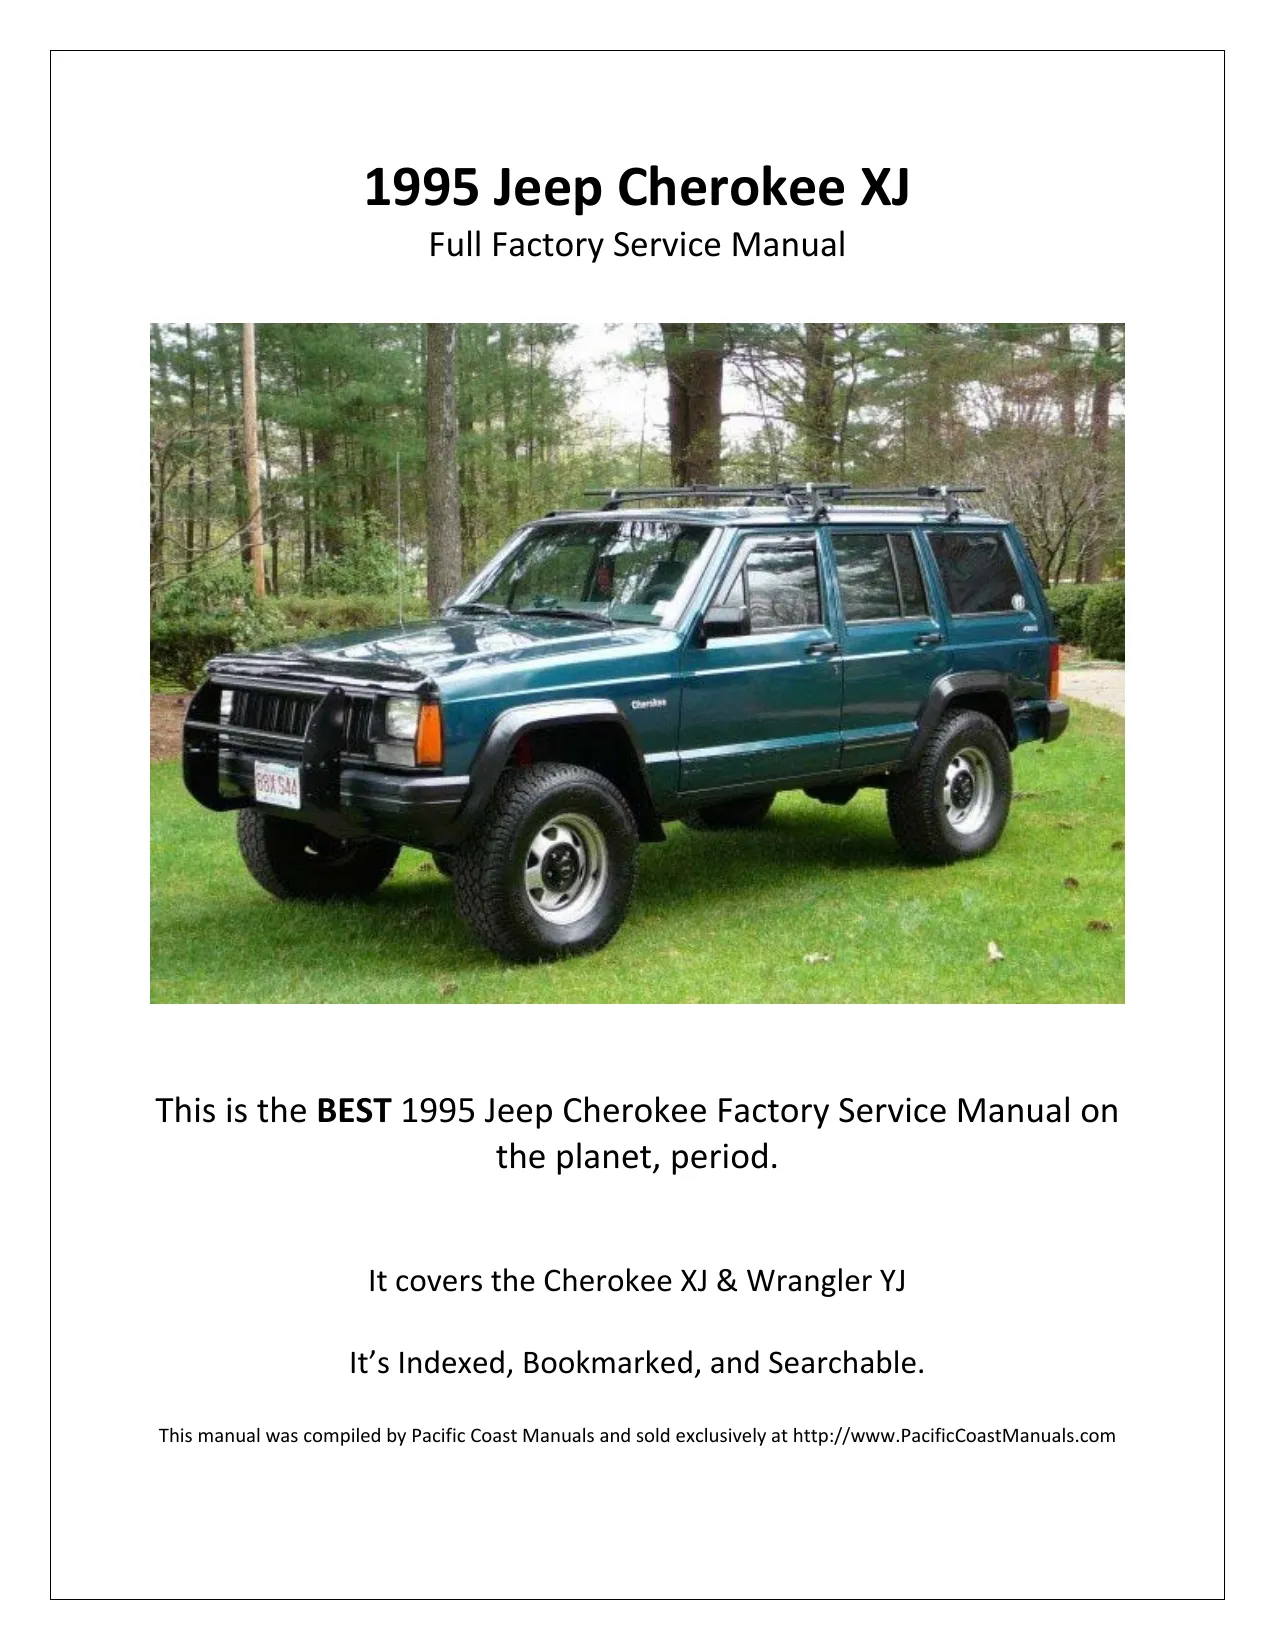 1995 Jeep Cherokee XJ SUV repair manual